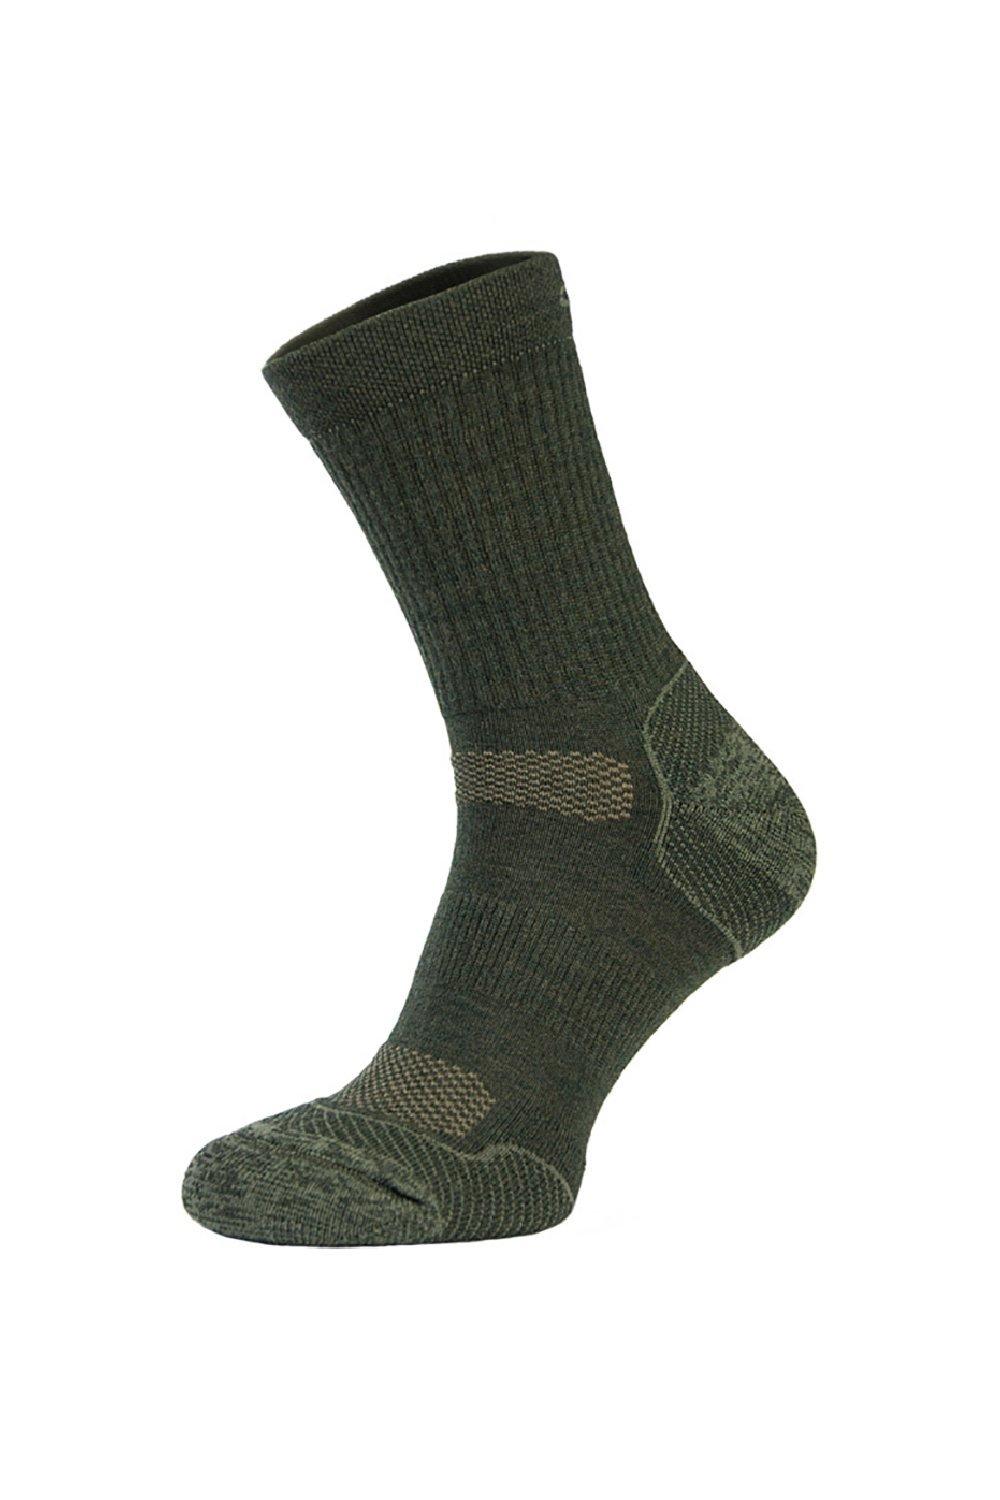 Outdoor Performance Merino Wool Quick Drying Lightweight Socks